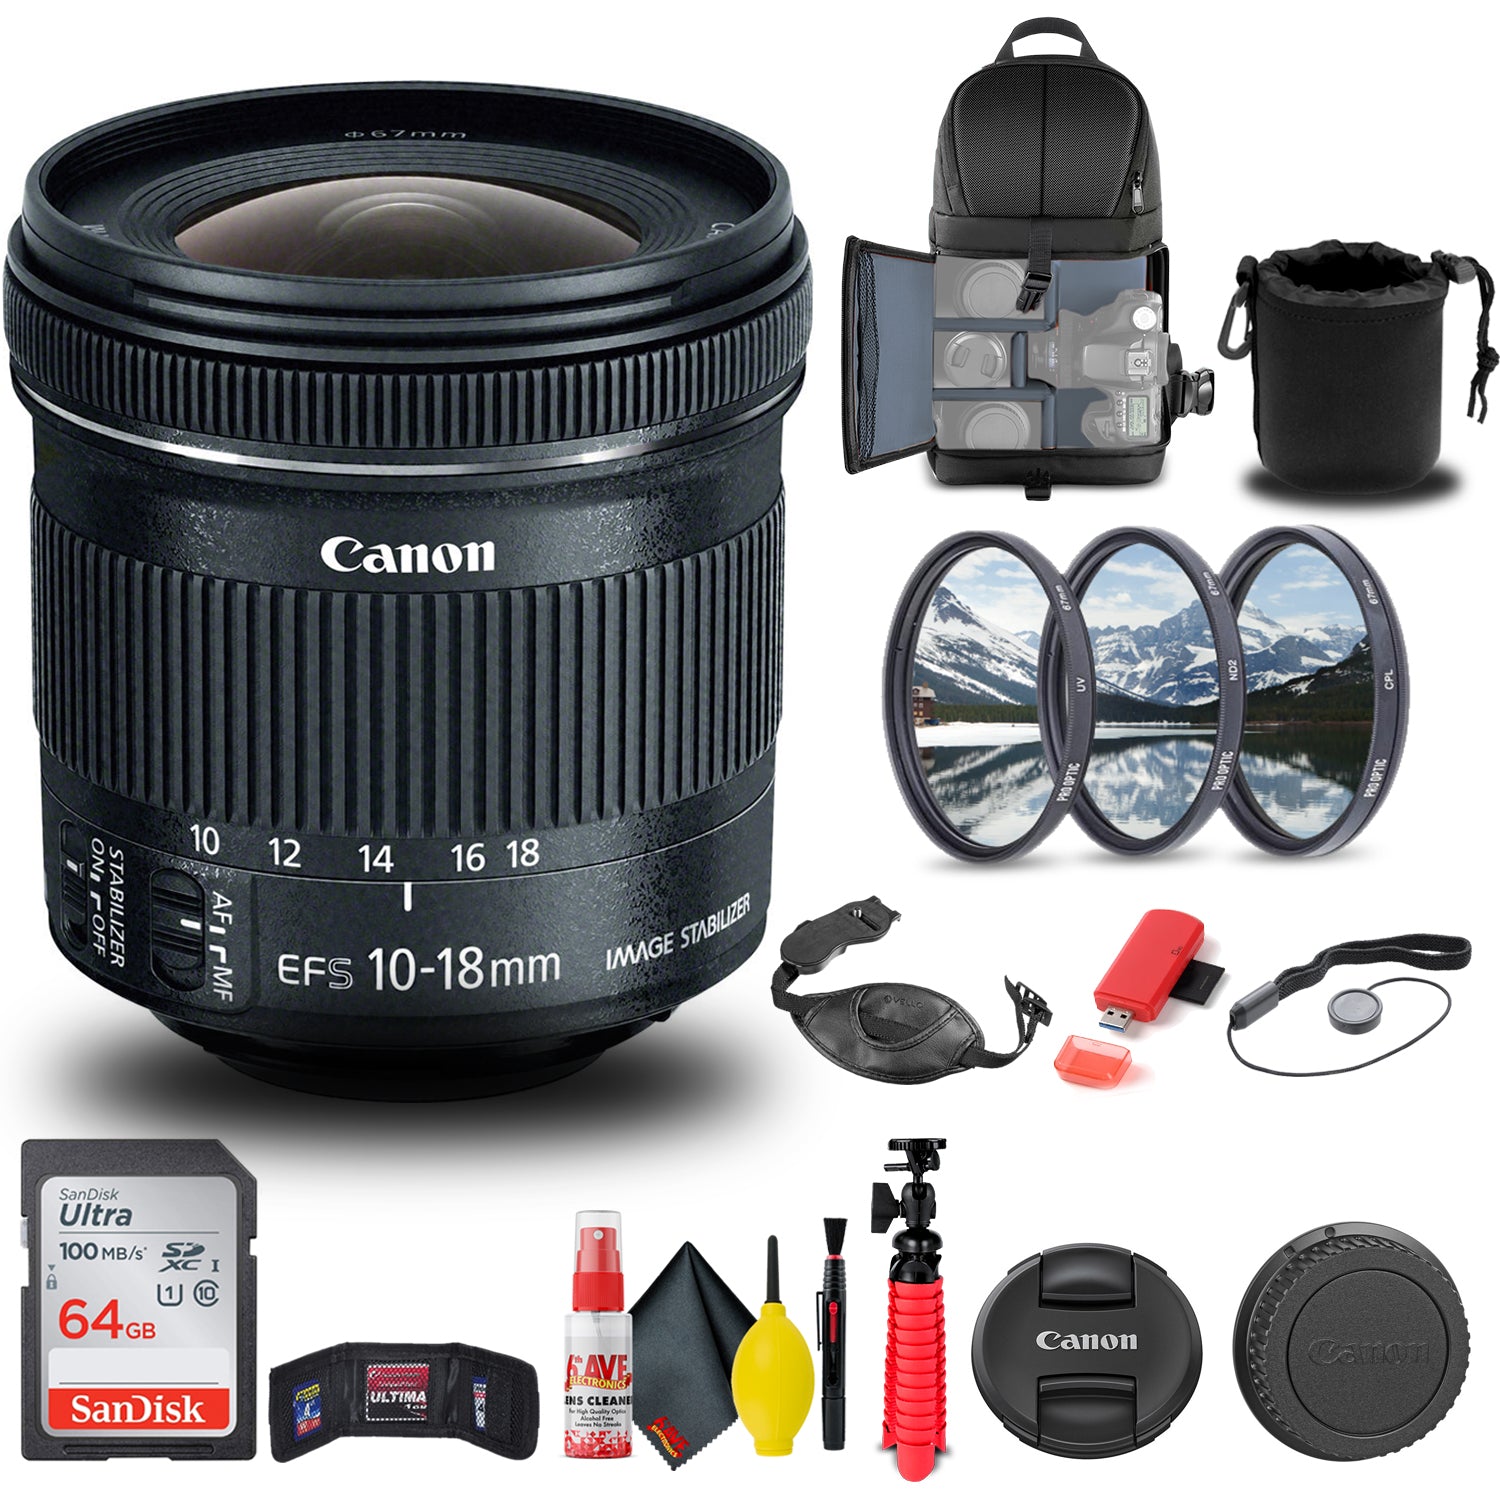 Canon EF-S 10-18mm f/4.5-5.6 IS STM Lens (9519B002) + Filter + BackPack + More